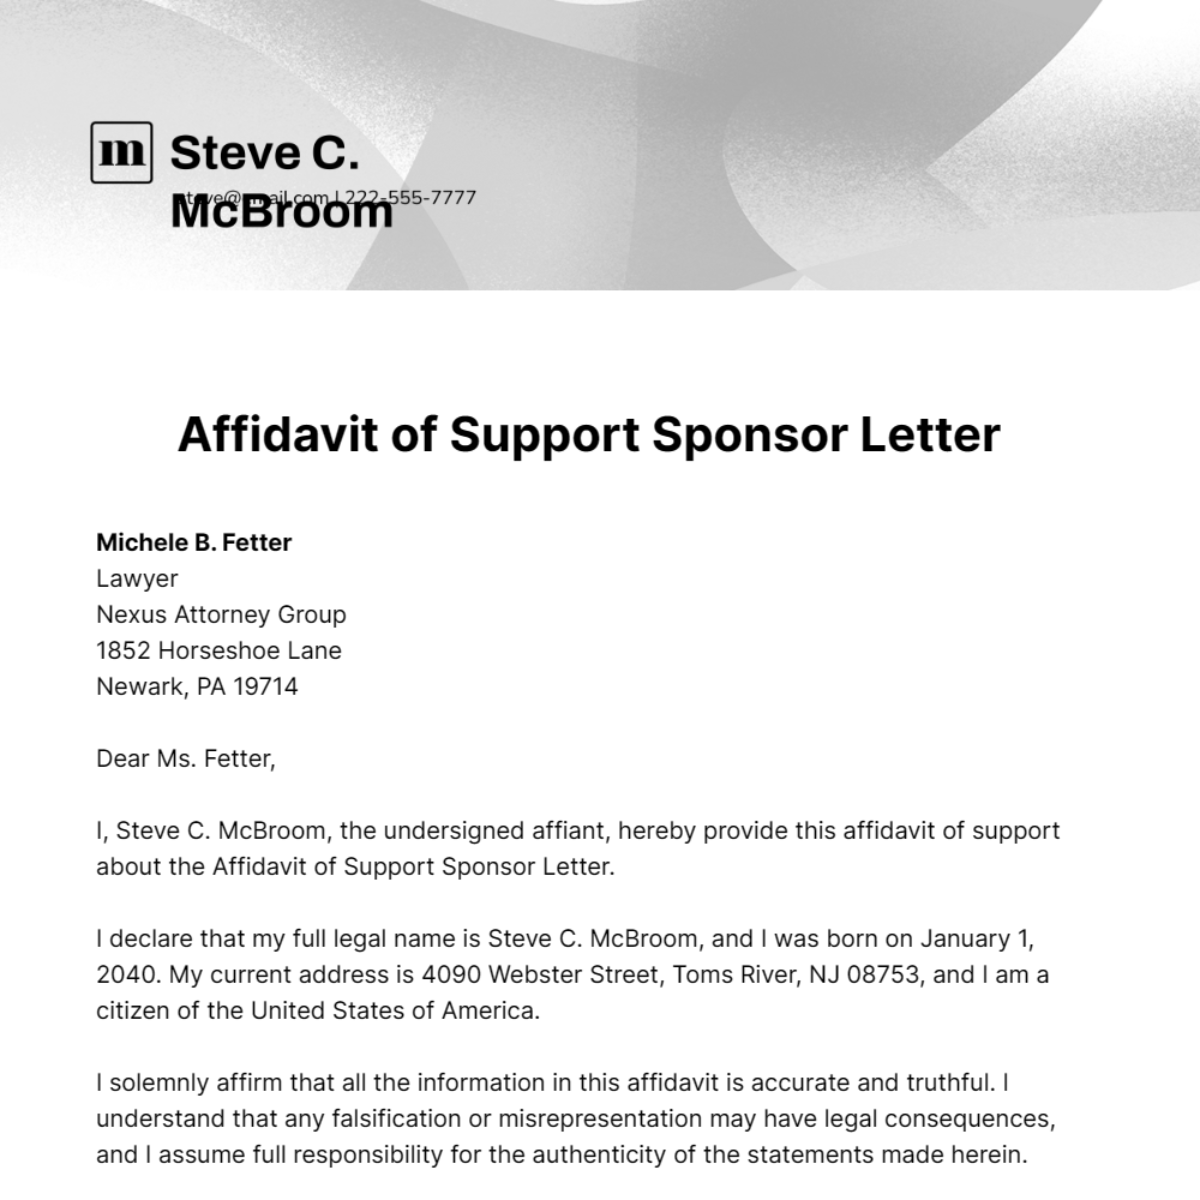 Affidavit of Support Sponsor Letter Template